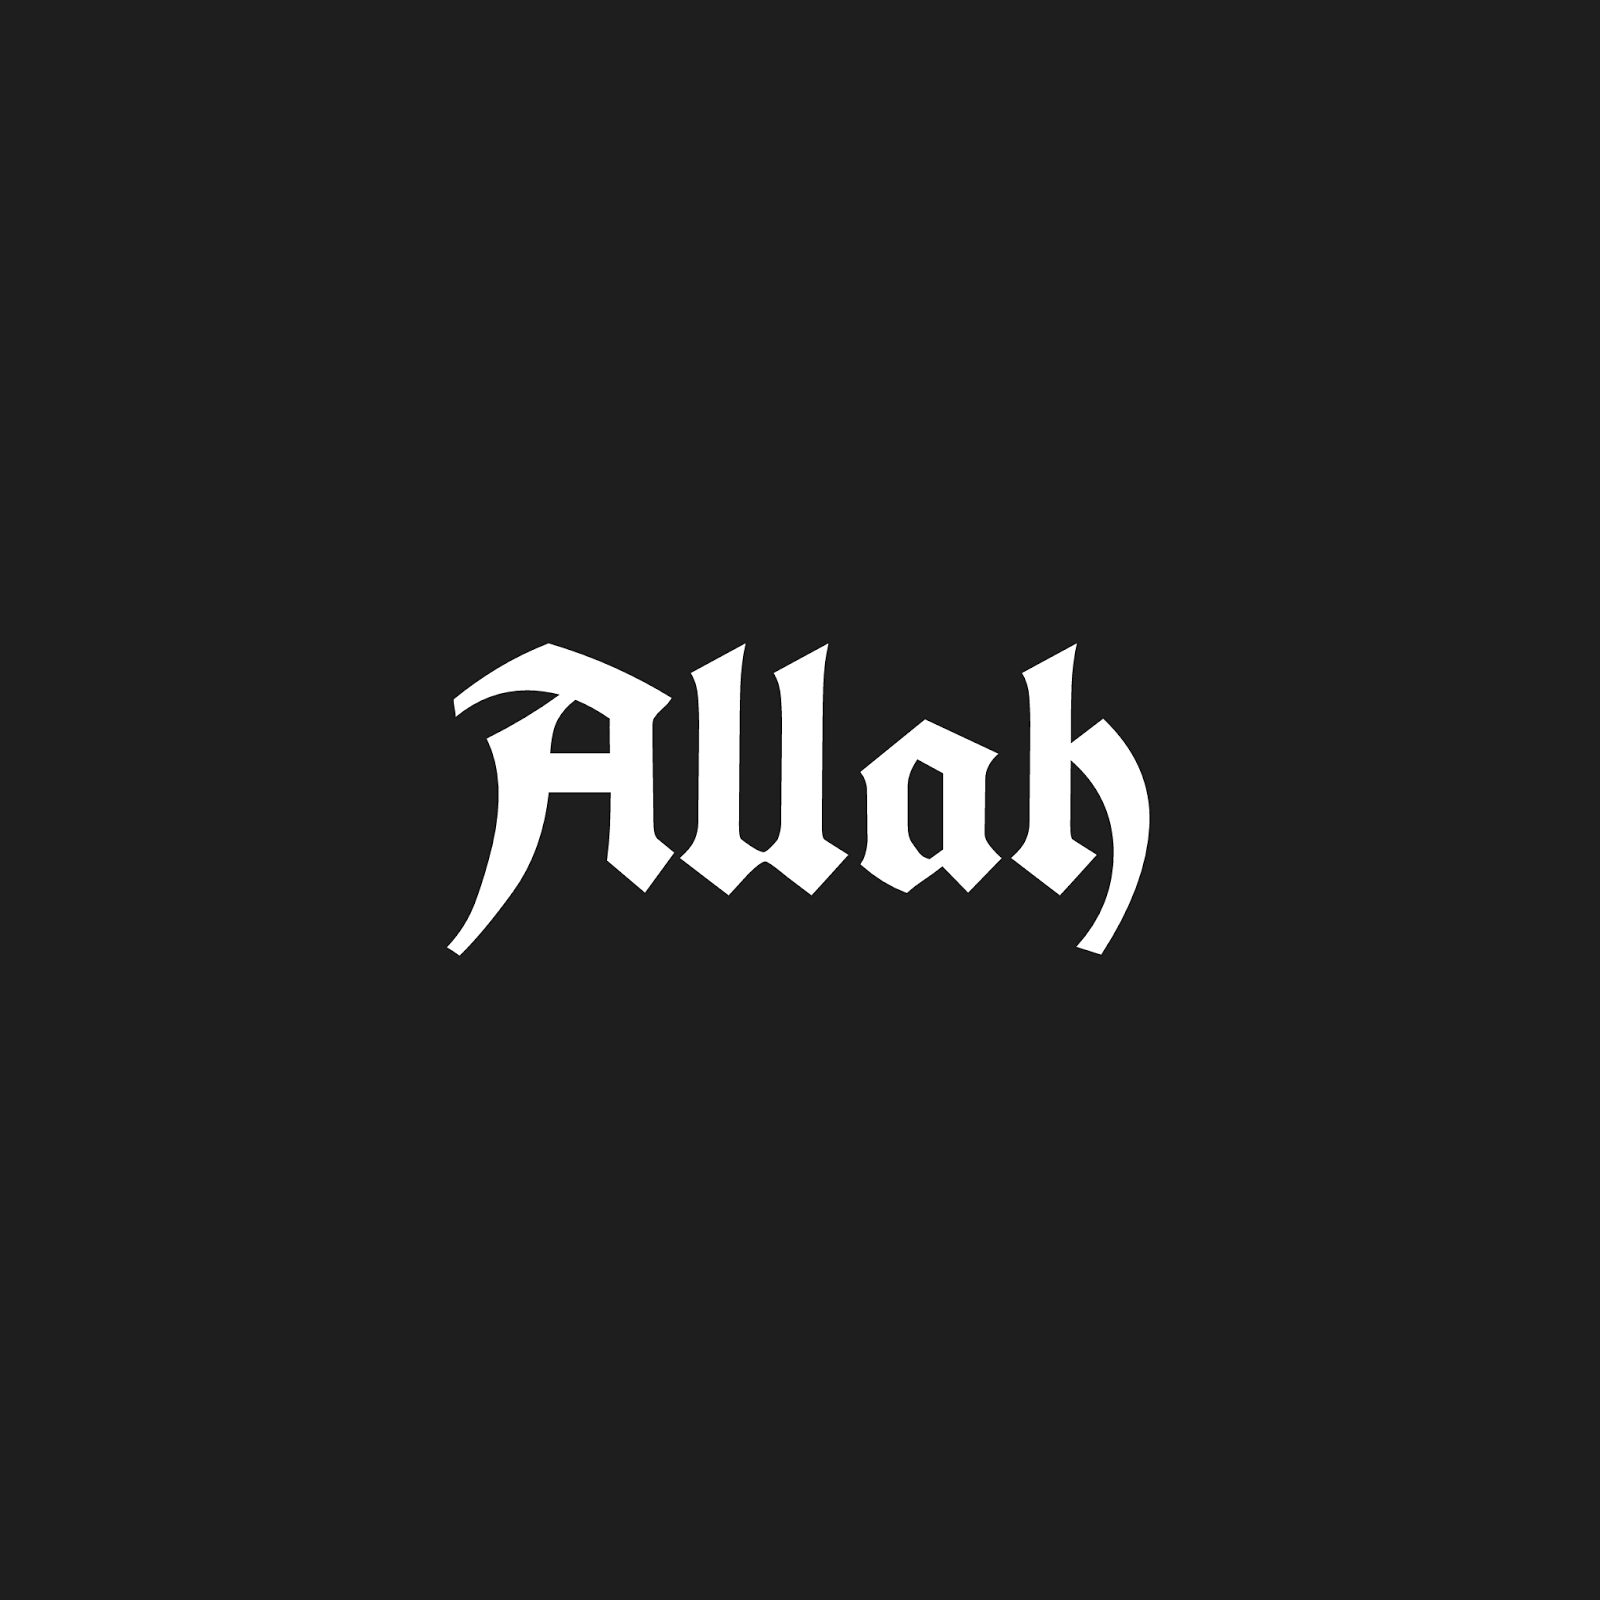 Islam Allah - Graphic Design - 1600x1600 Wallpaper 